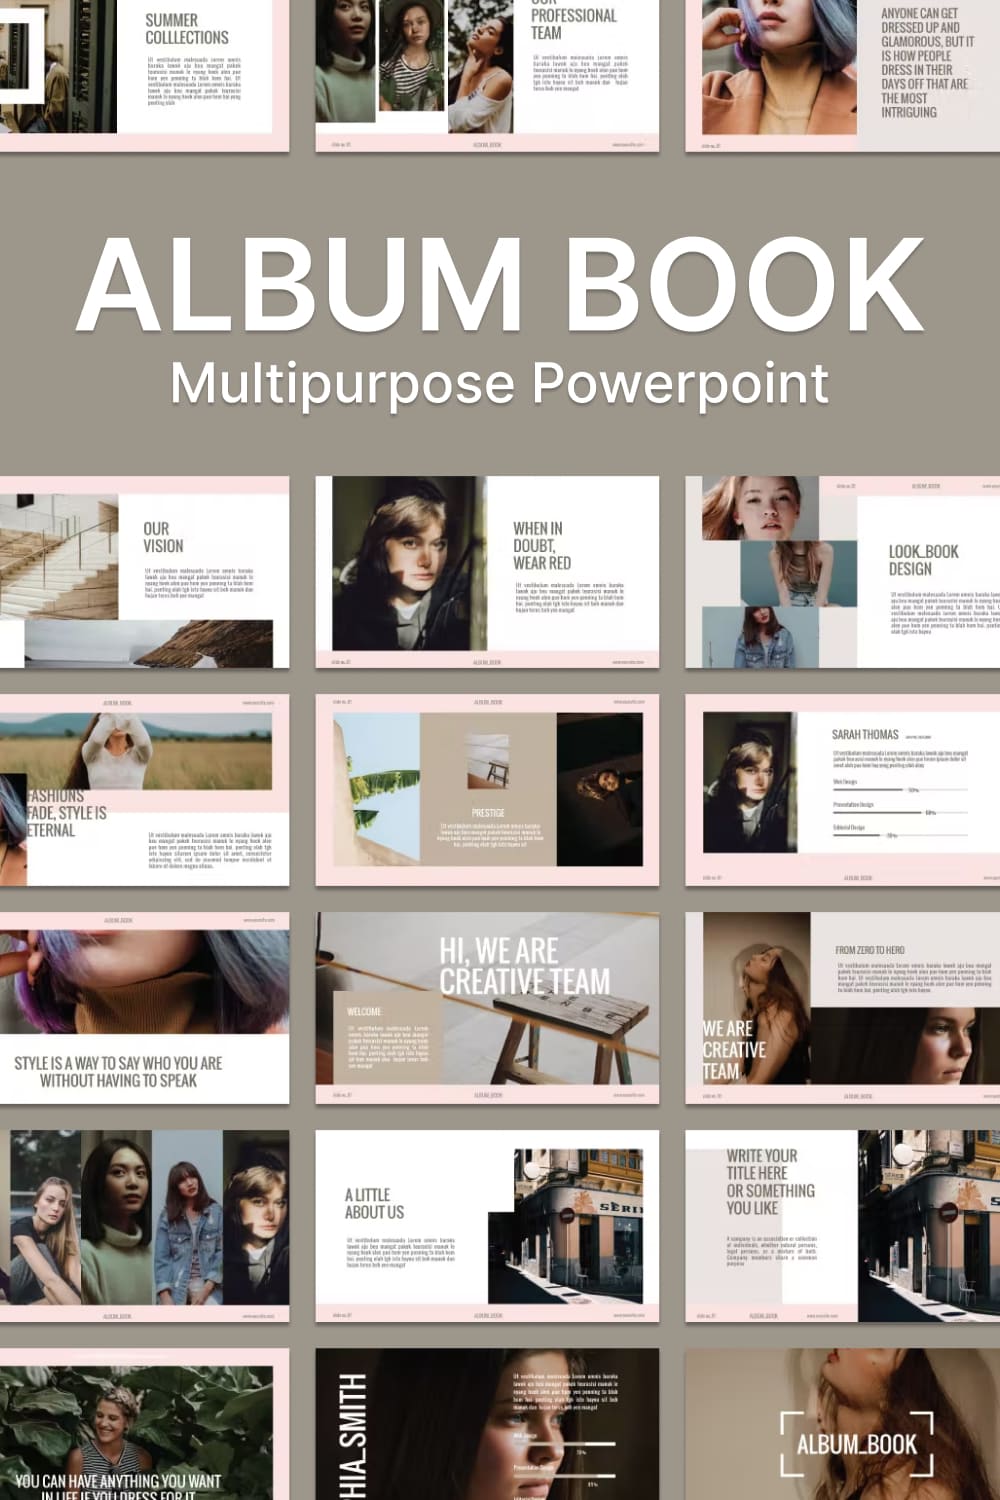 Album book multipurpose powerpoint - pinterest image preview.